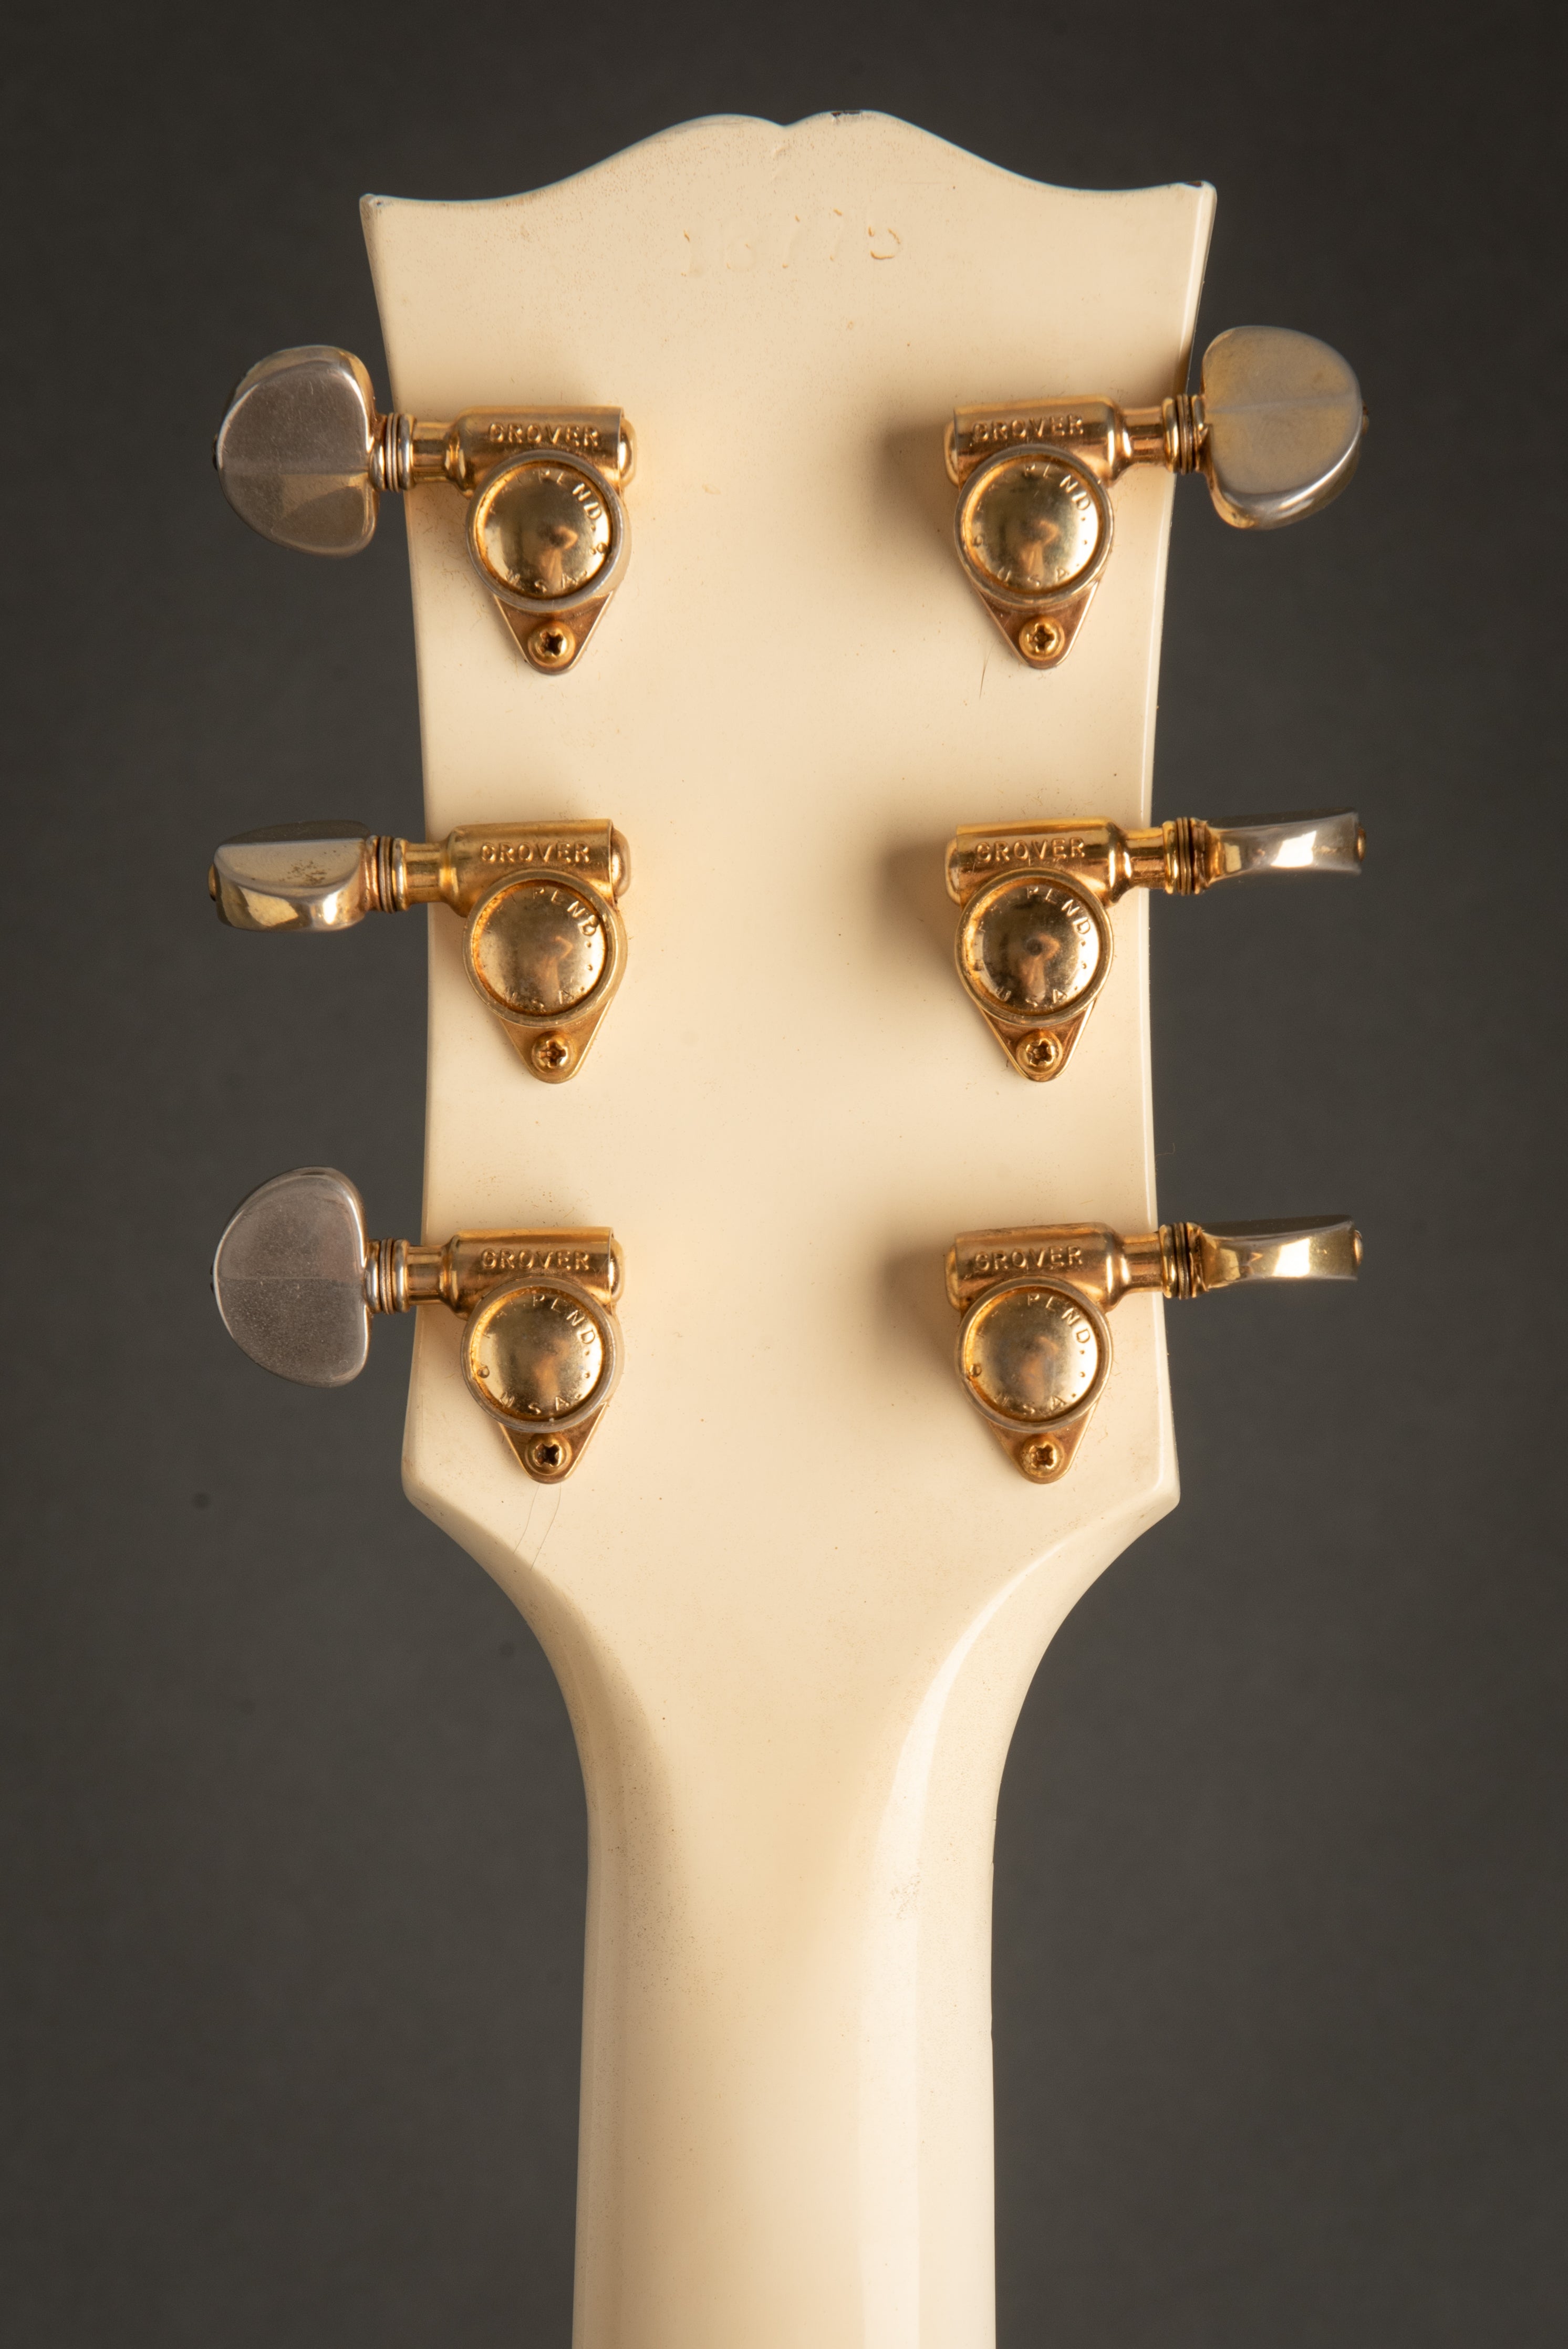 1961 Gibson SG Les Paul Custom Electric Guitar